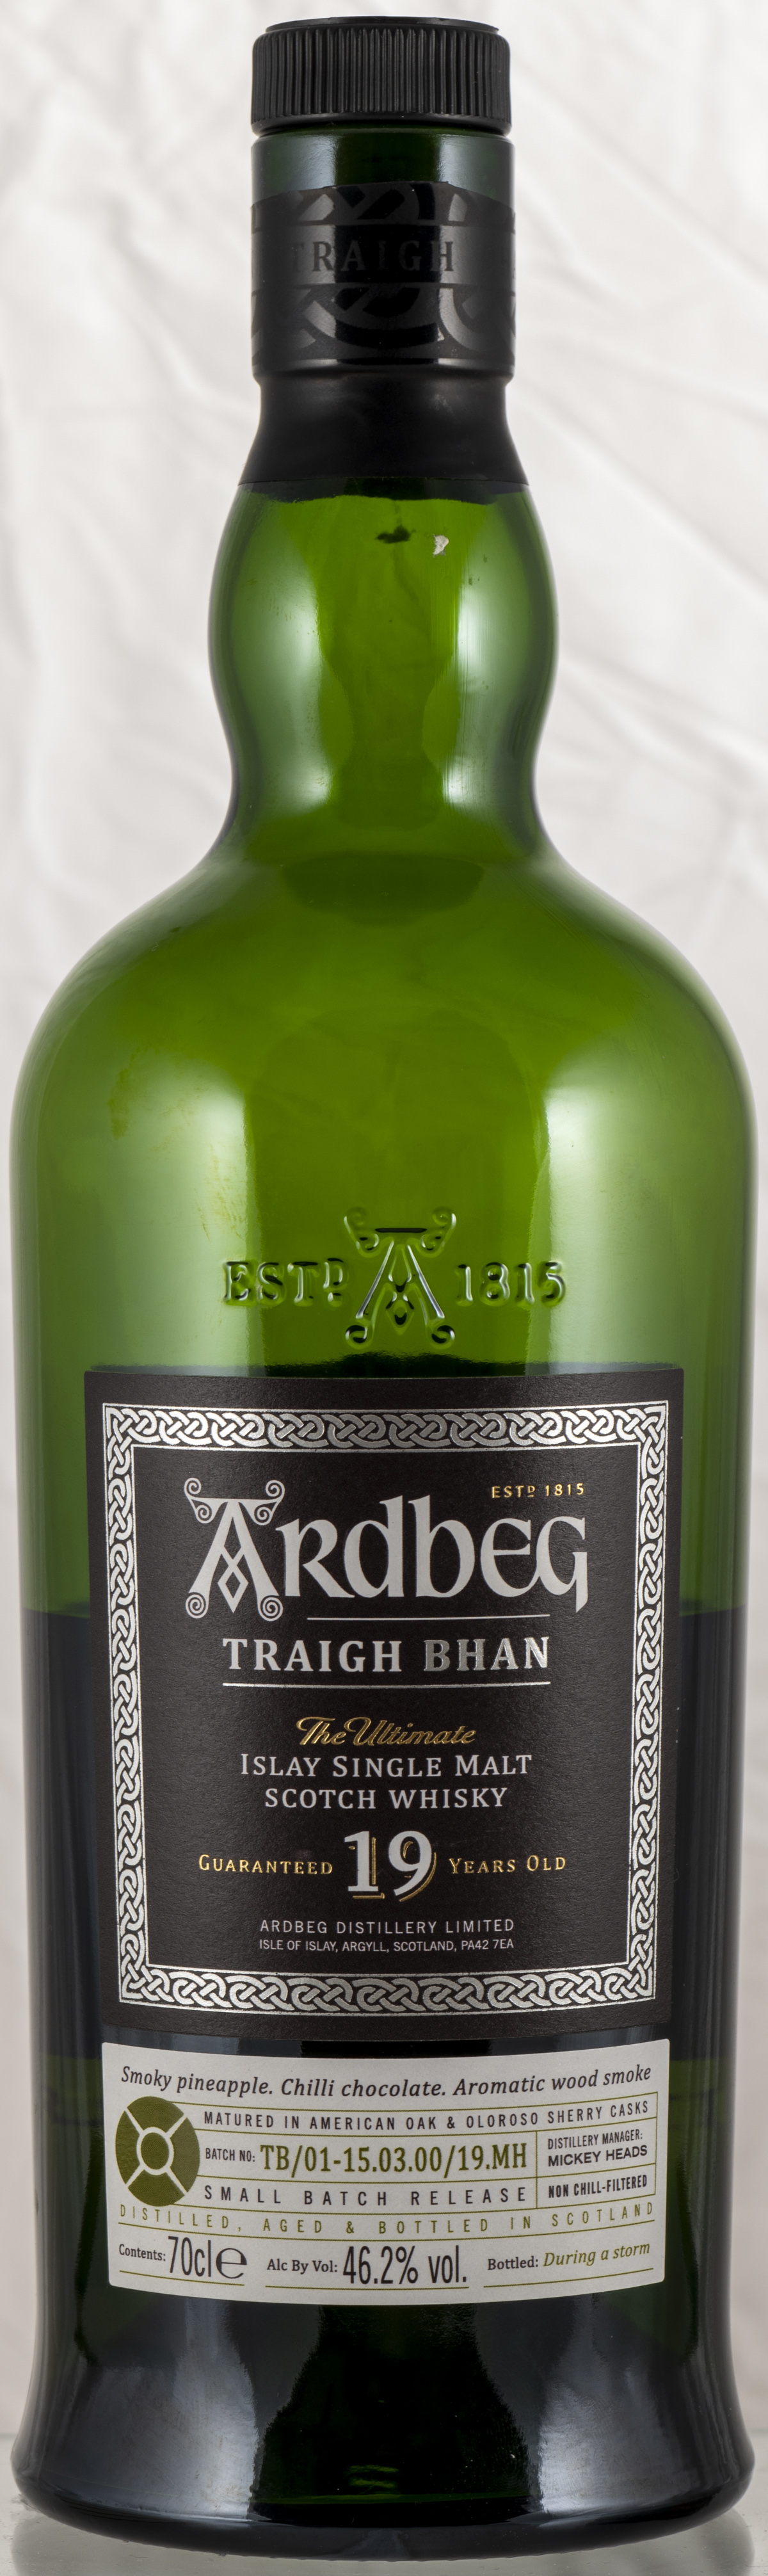 Billede: PHC_4050 - Ardbeg Thraigh Bhan 19 - bottle front.jpg